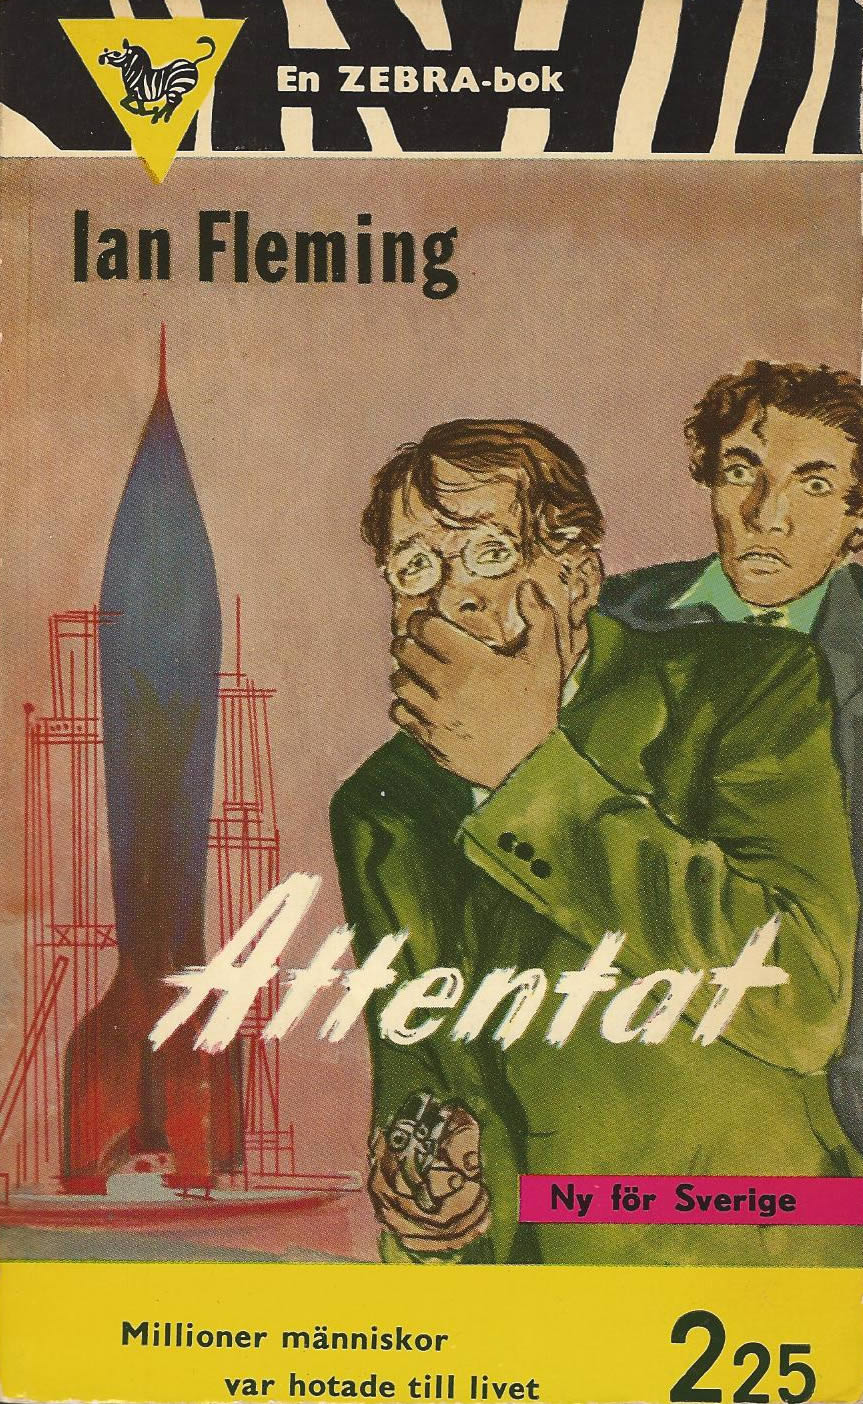 First edition UK hardcover Moonraker (1955)